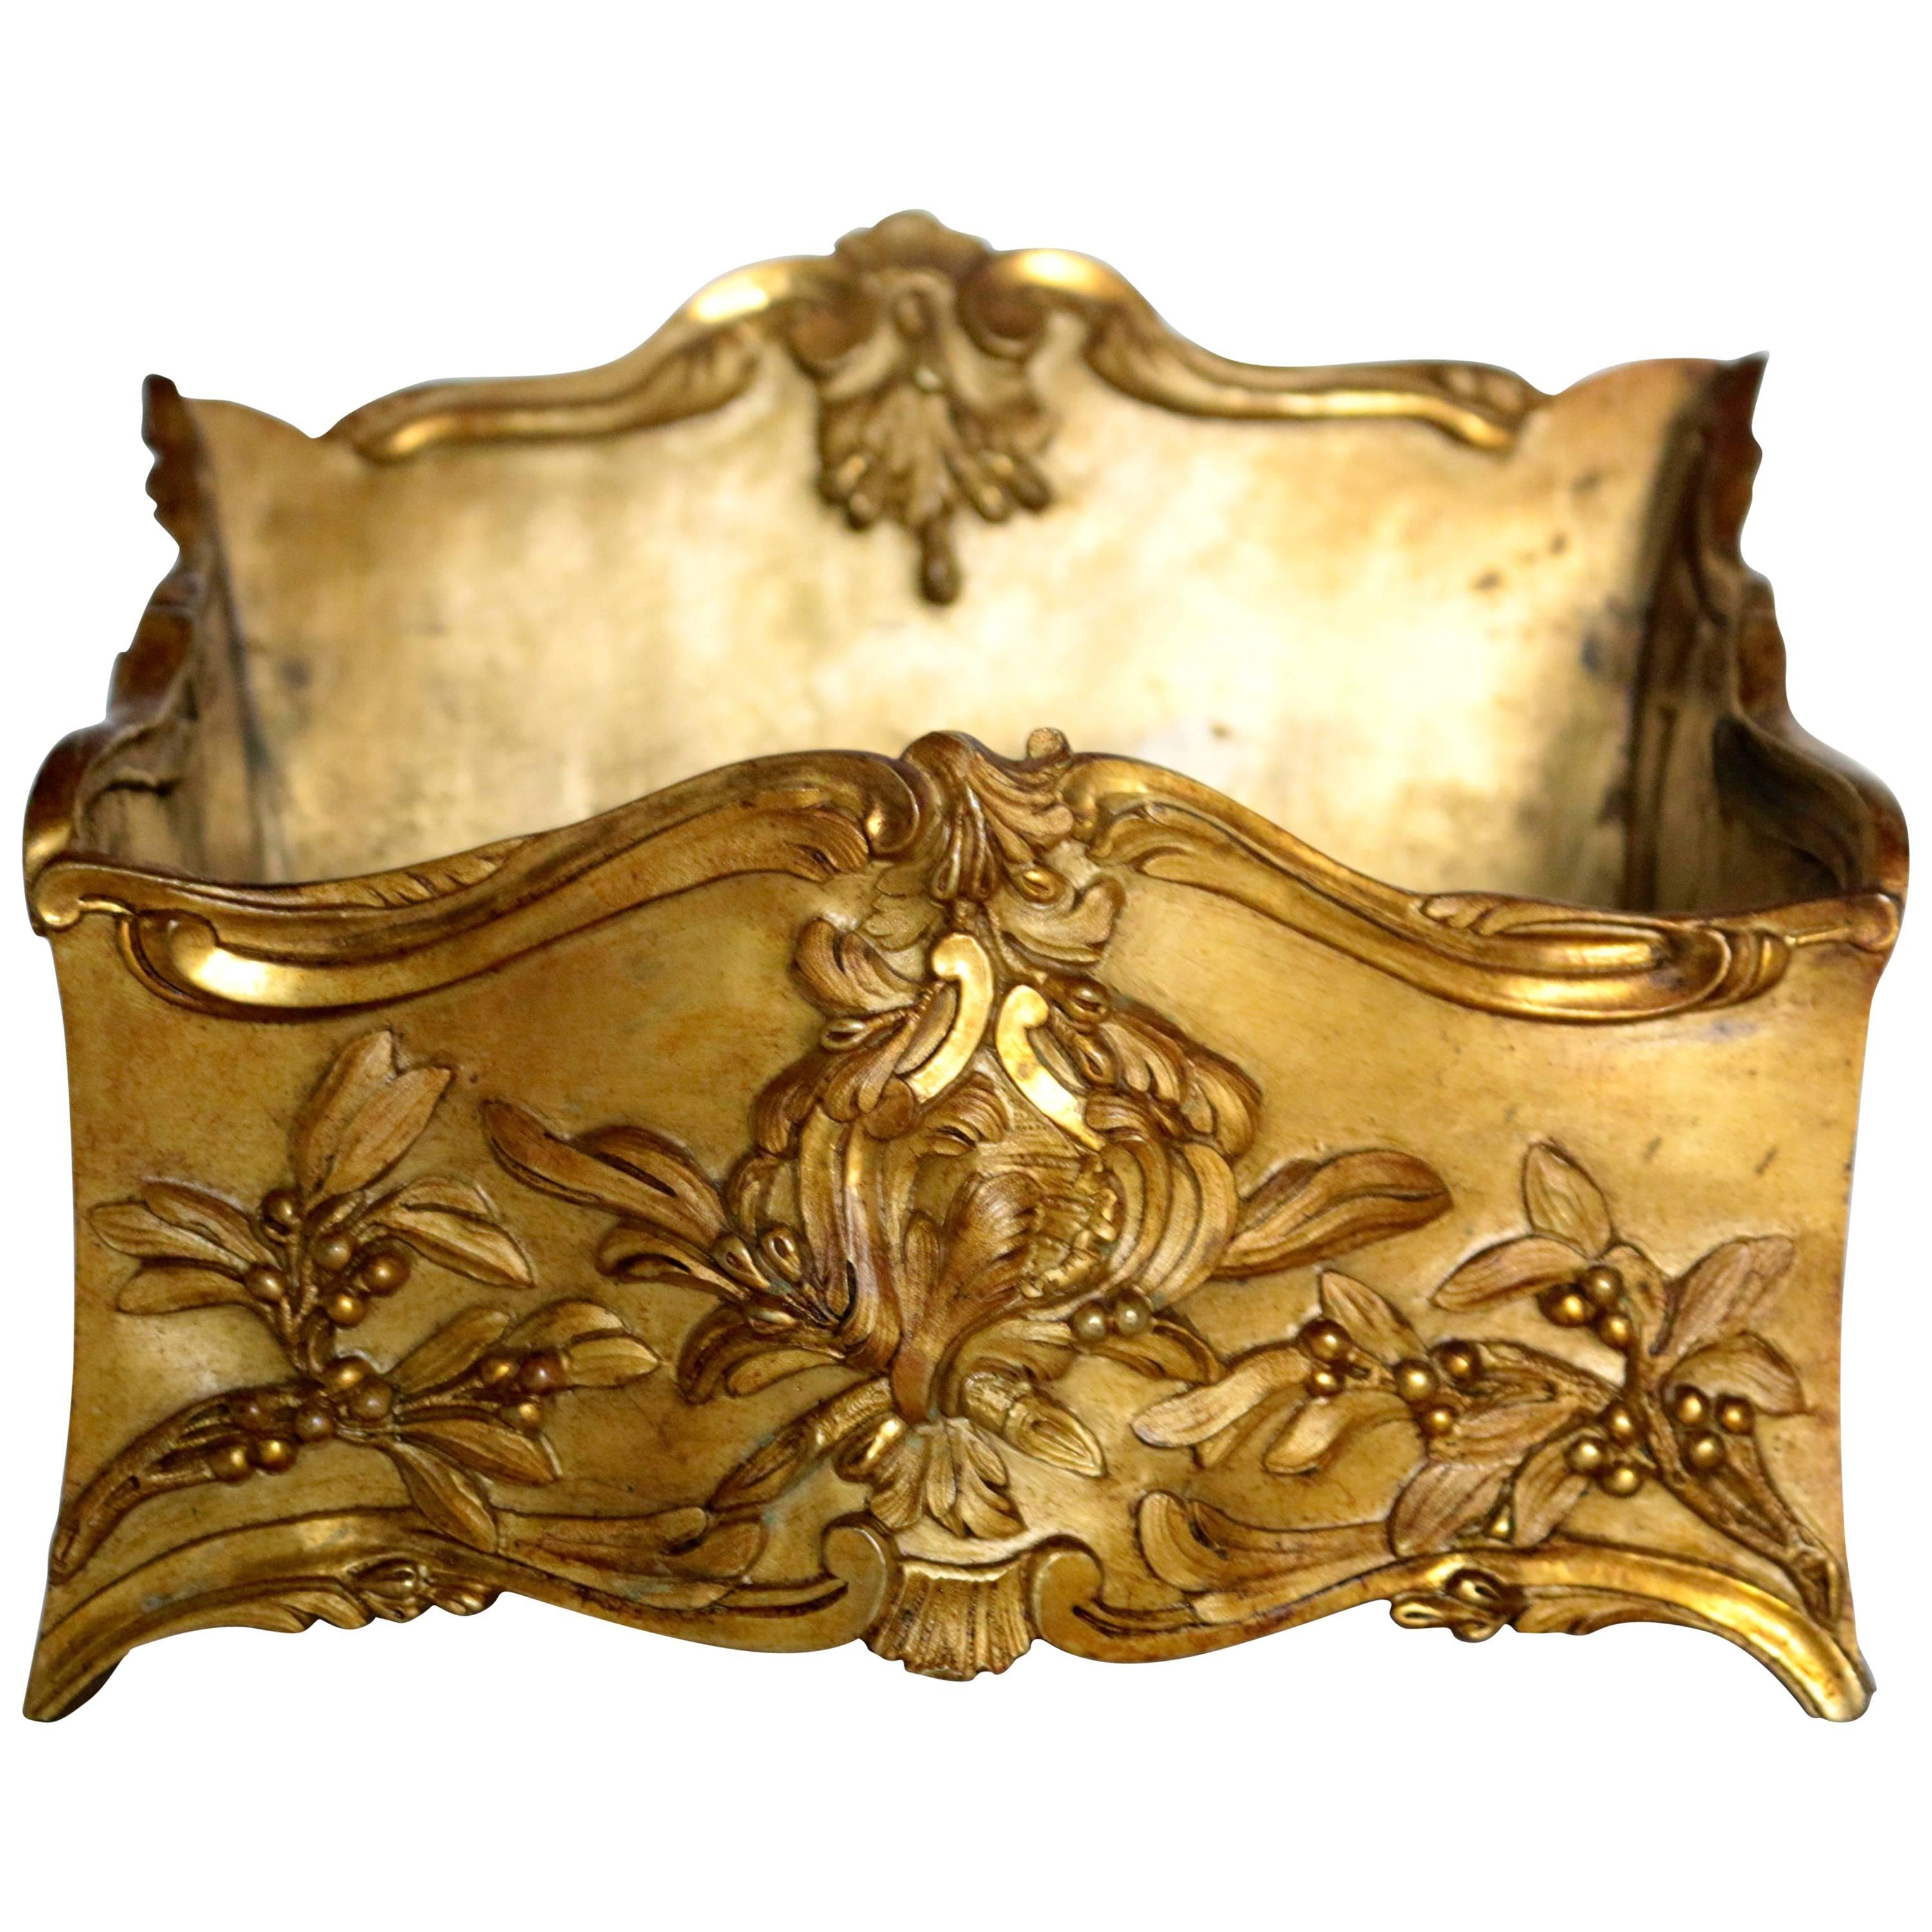 19th Century French Decorated Gilt Bronze Box